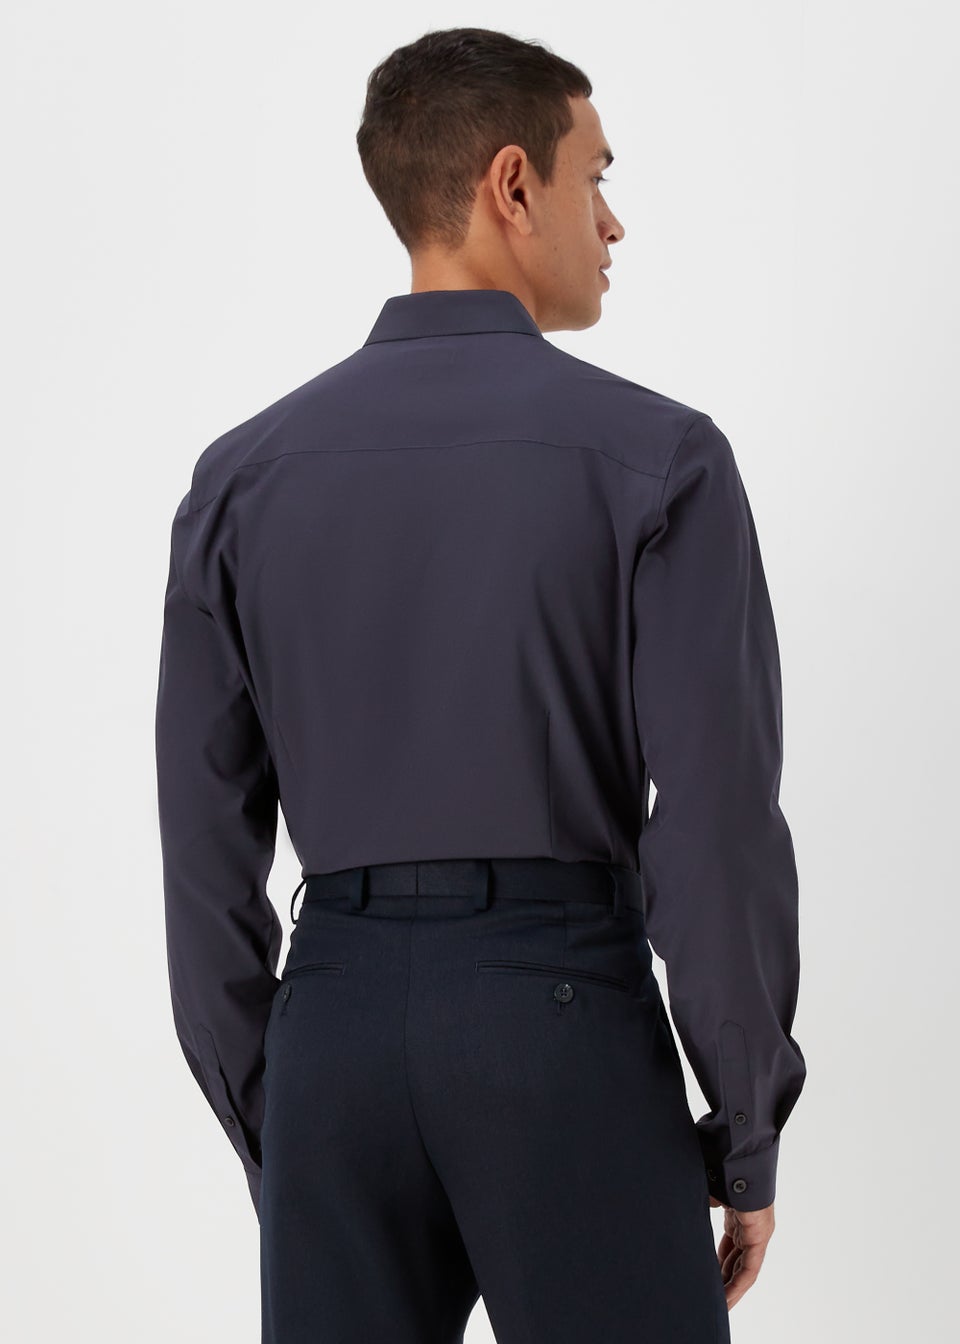 Taylor & Wright Navy 4 Way Stretch Slim Fit Shirt